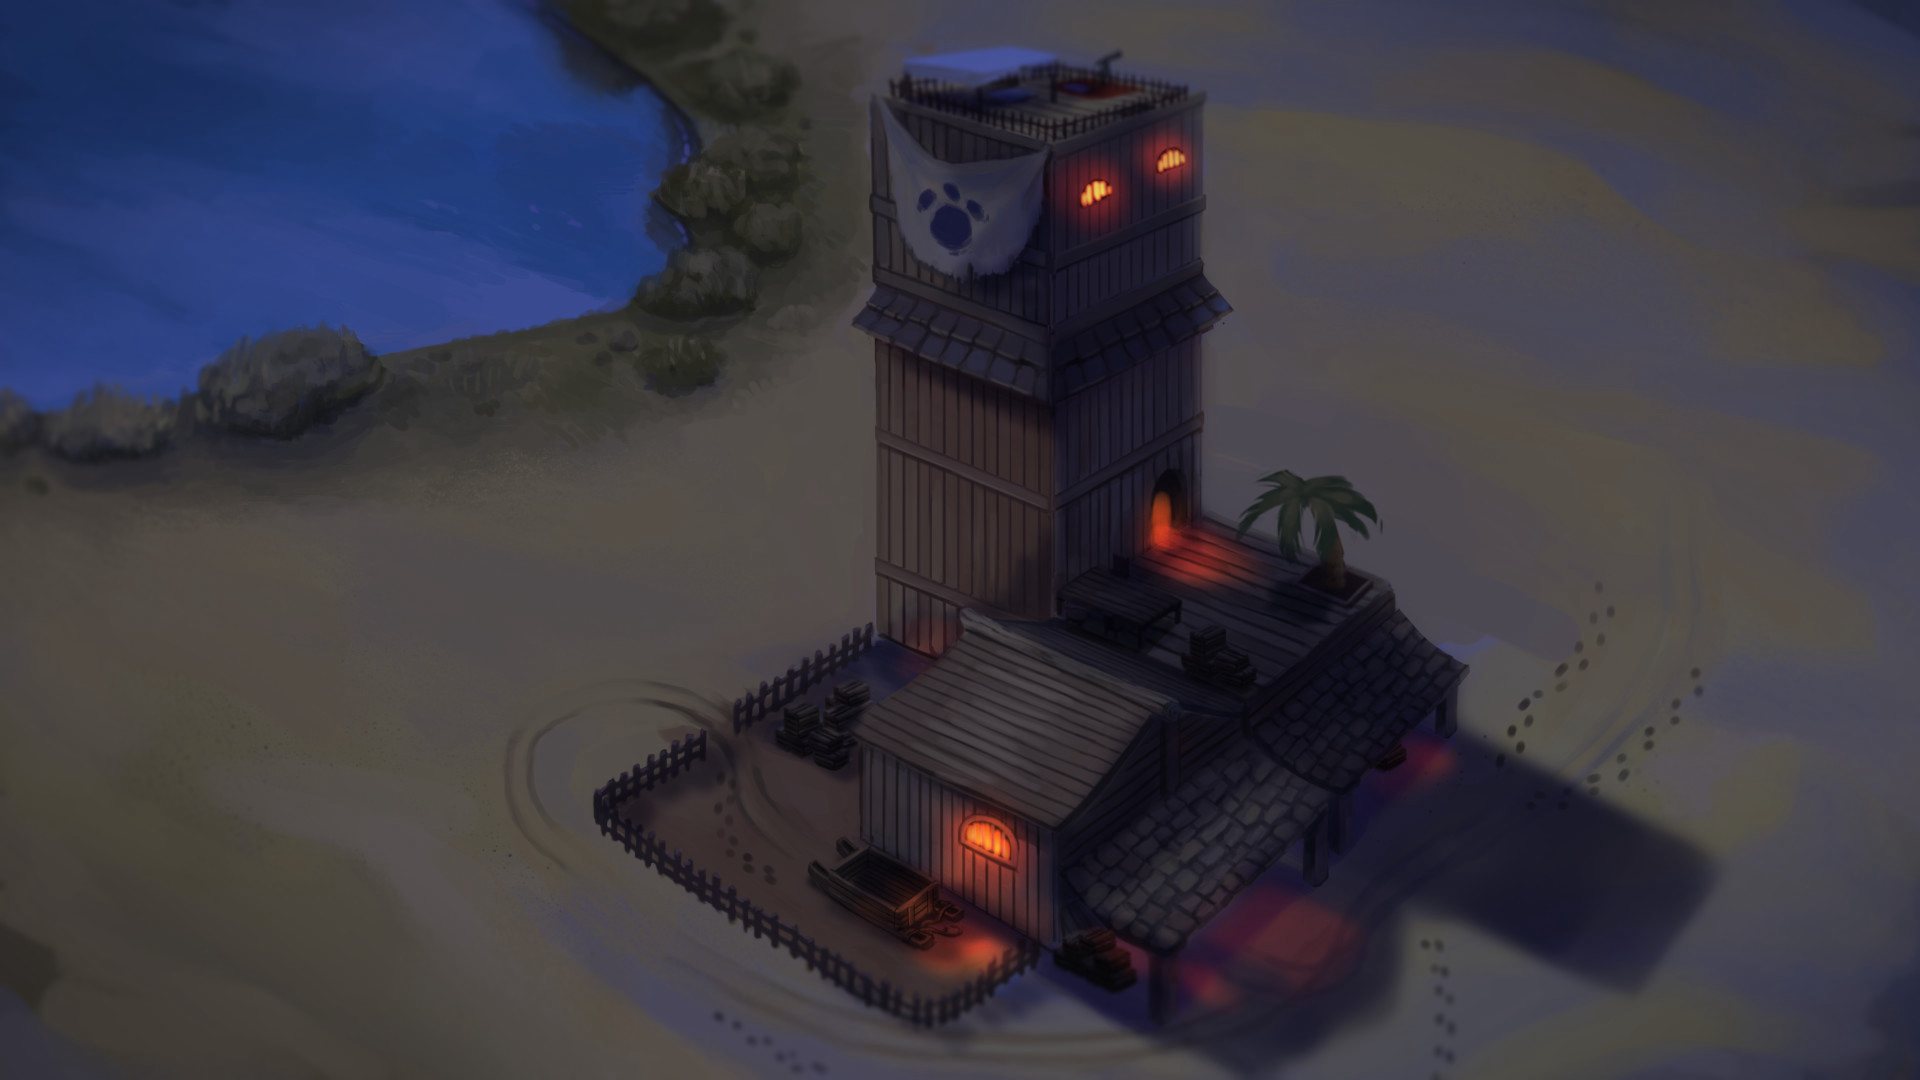 NAIRI: Tower Of Shirin Steam CD Key